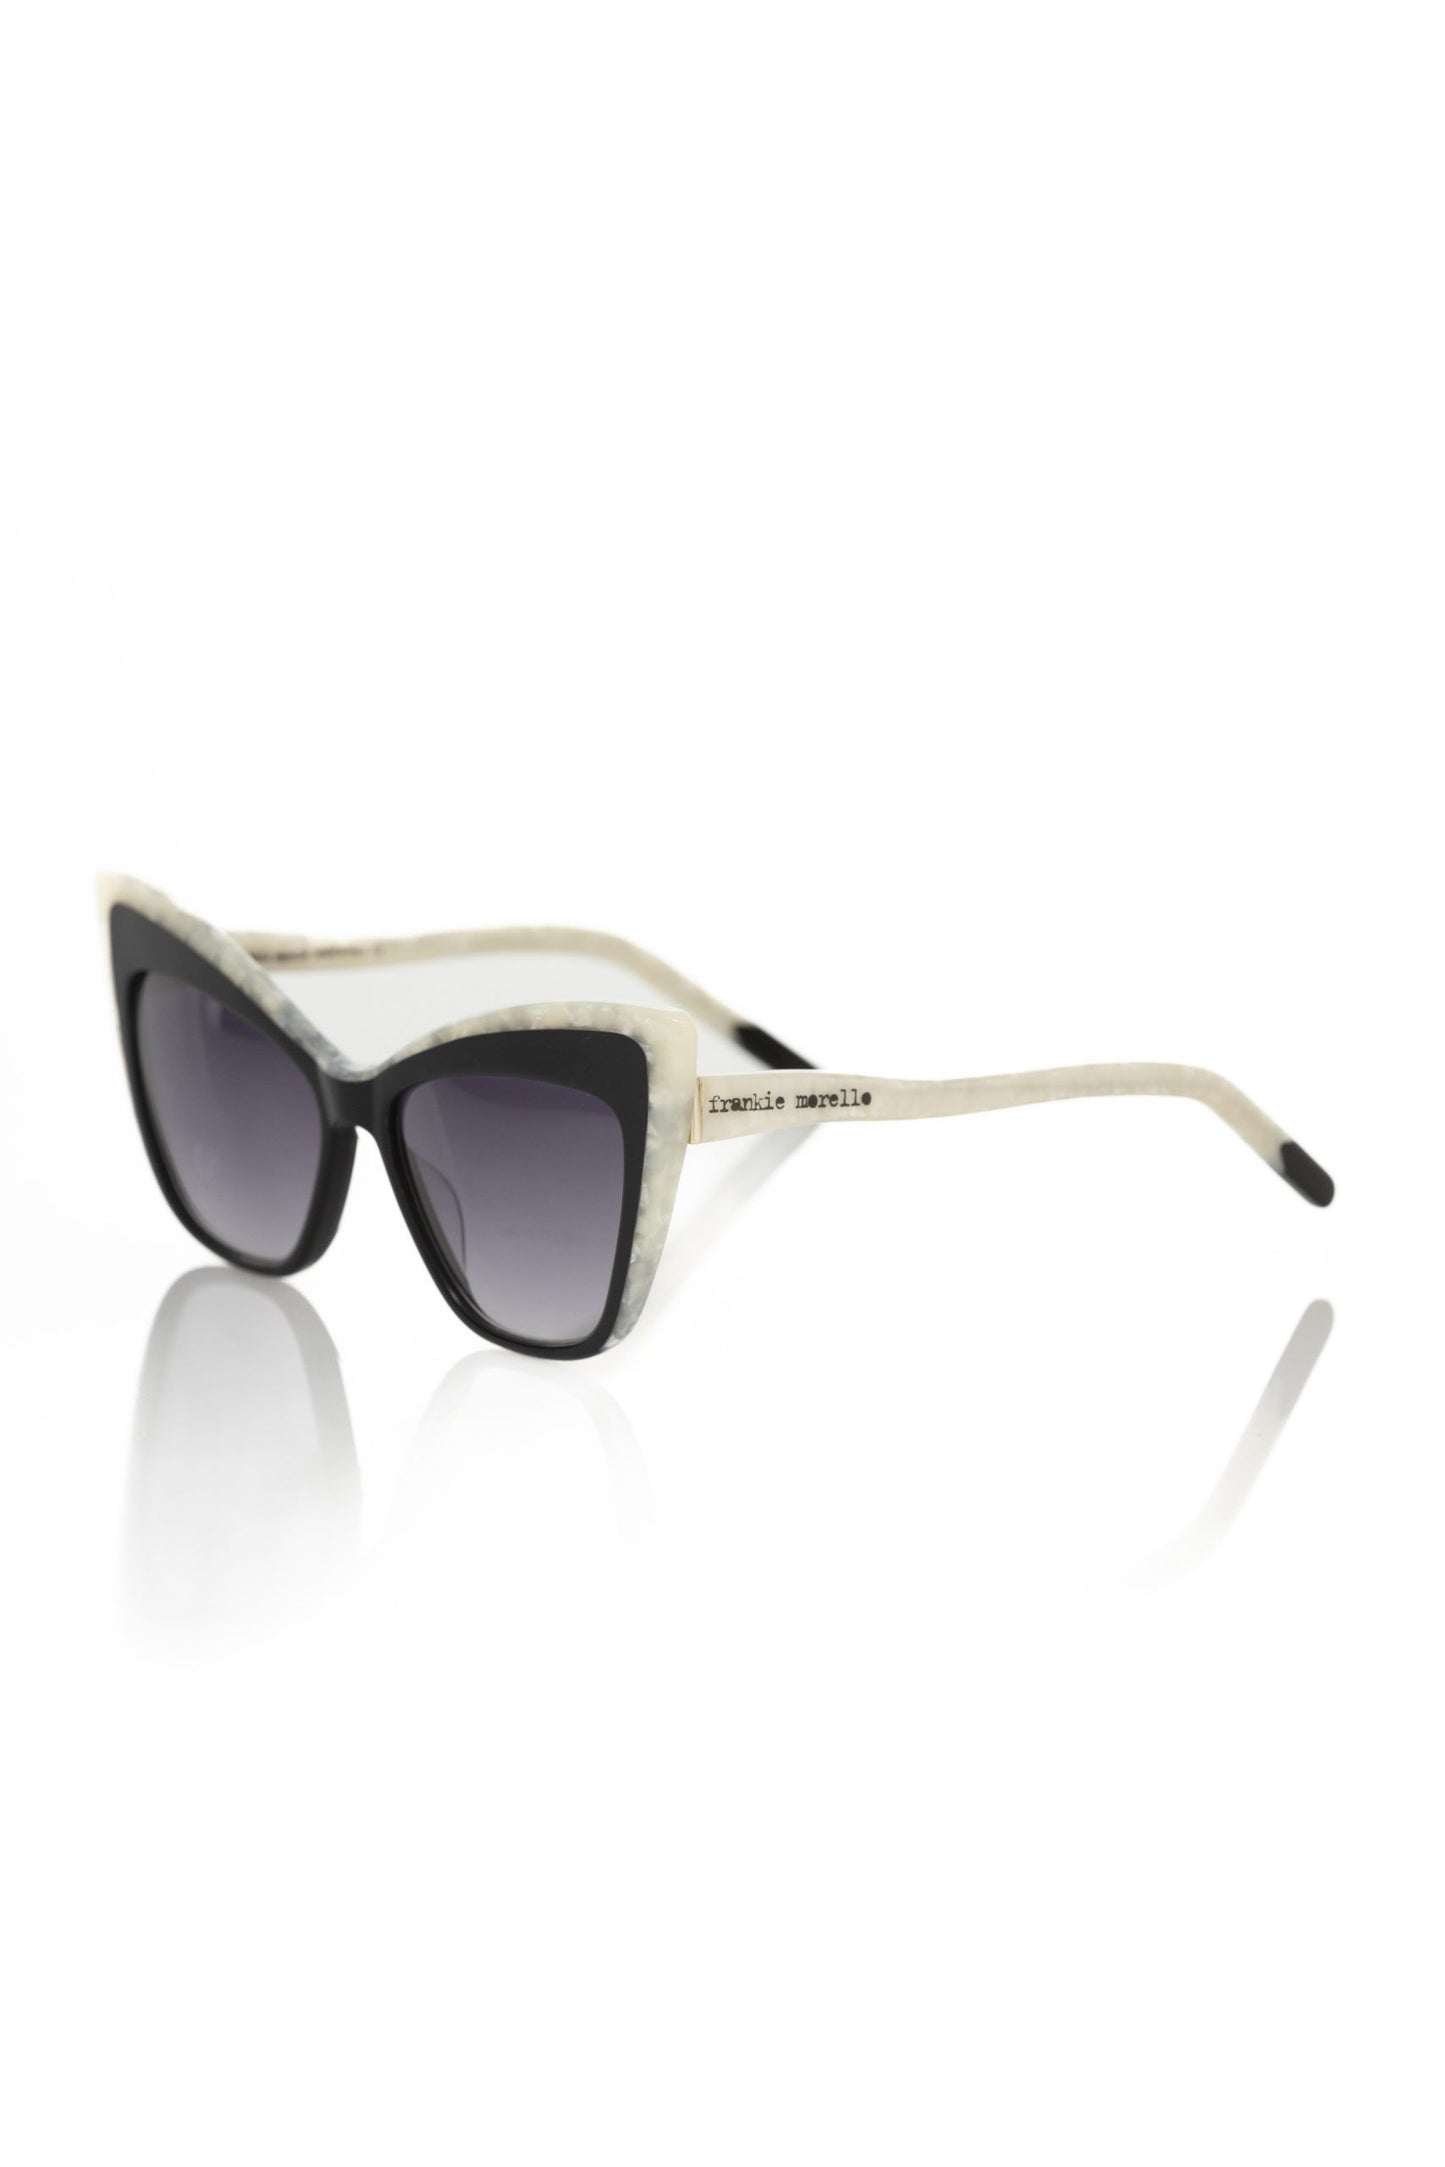 Frankie Morello FRMO-22076 Black Acetate Sunglasses